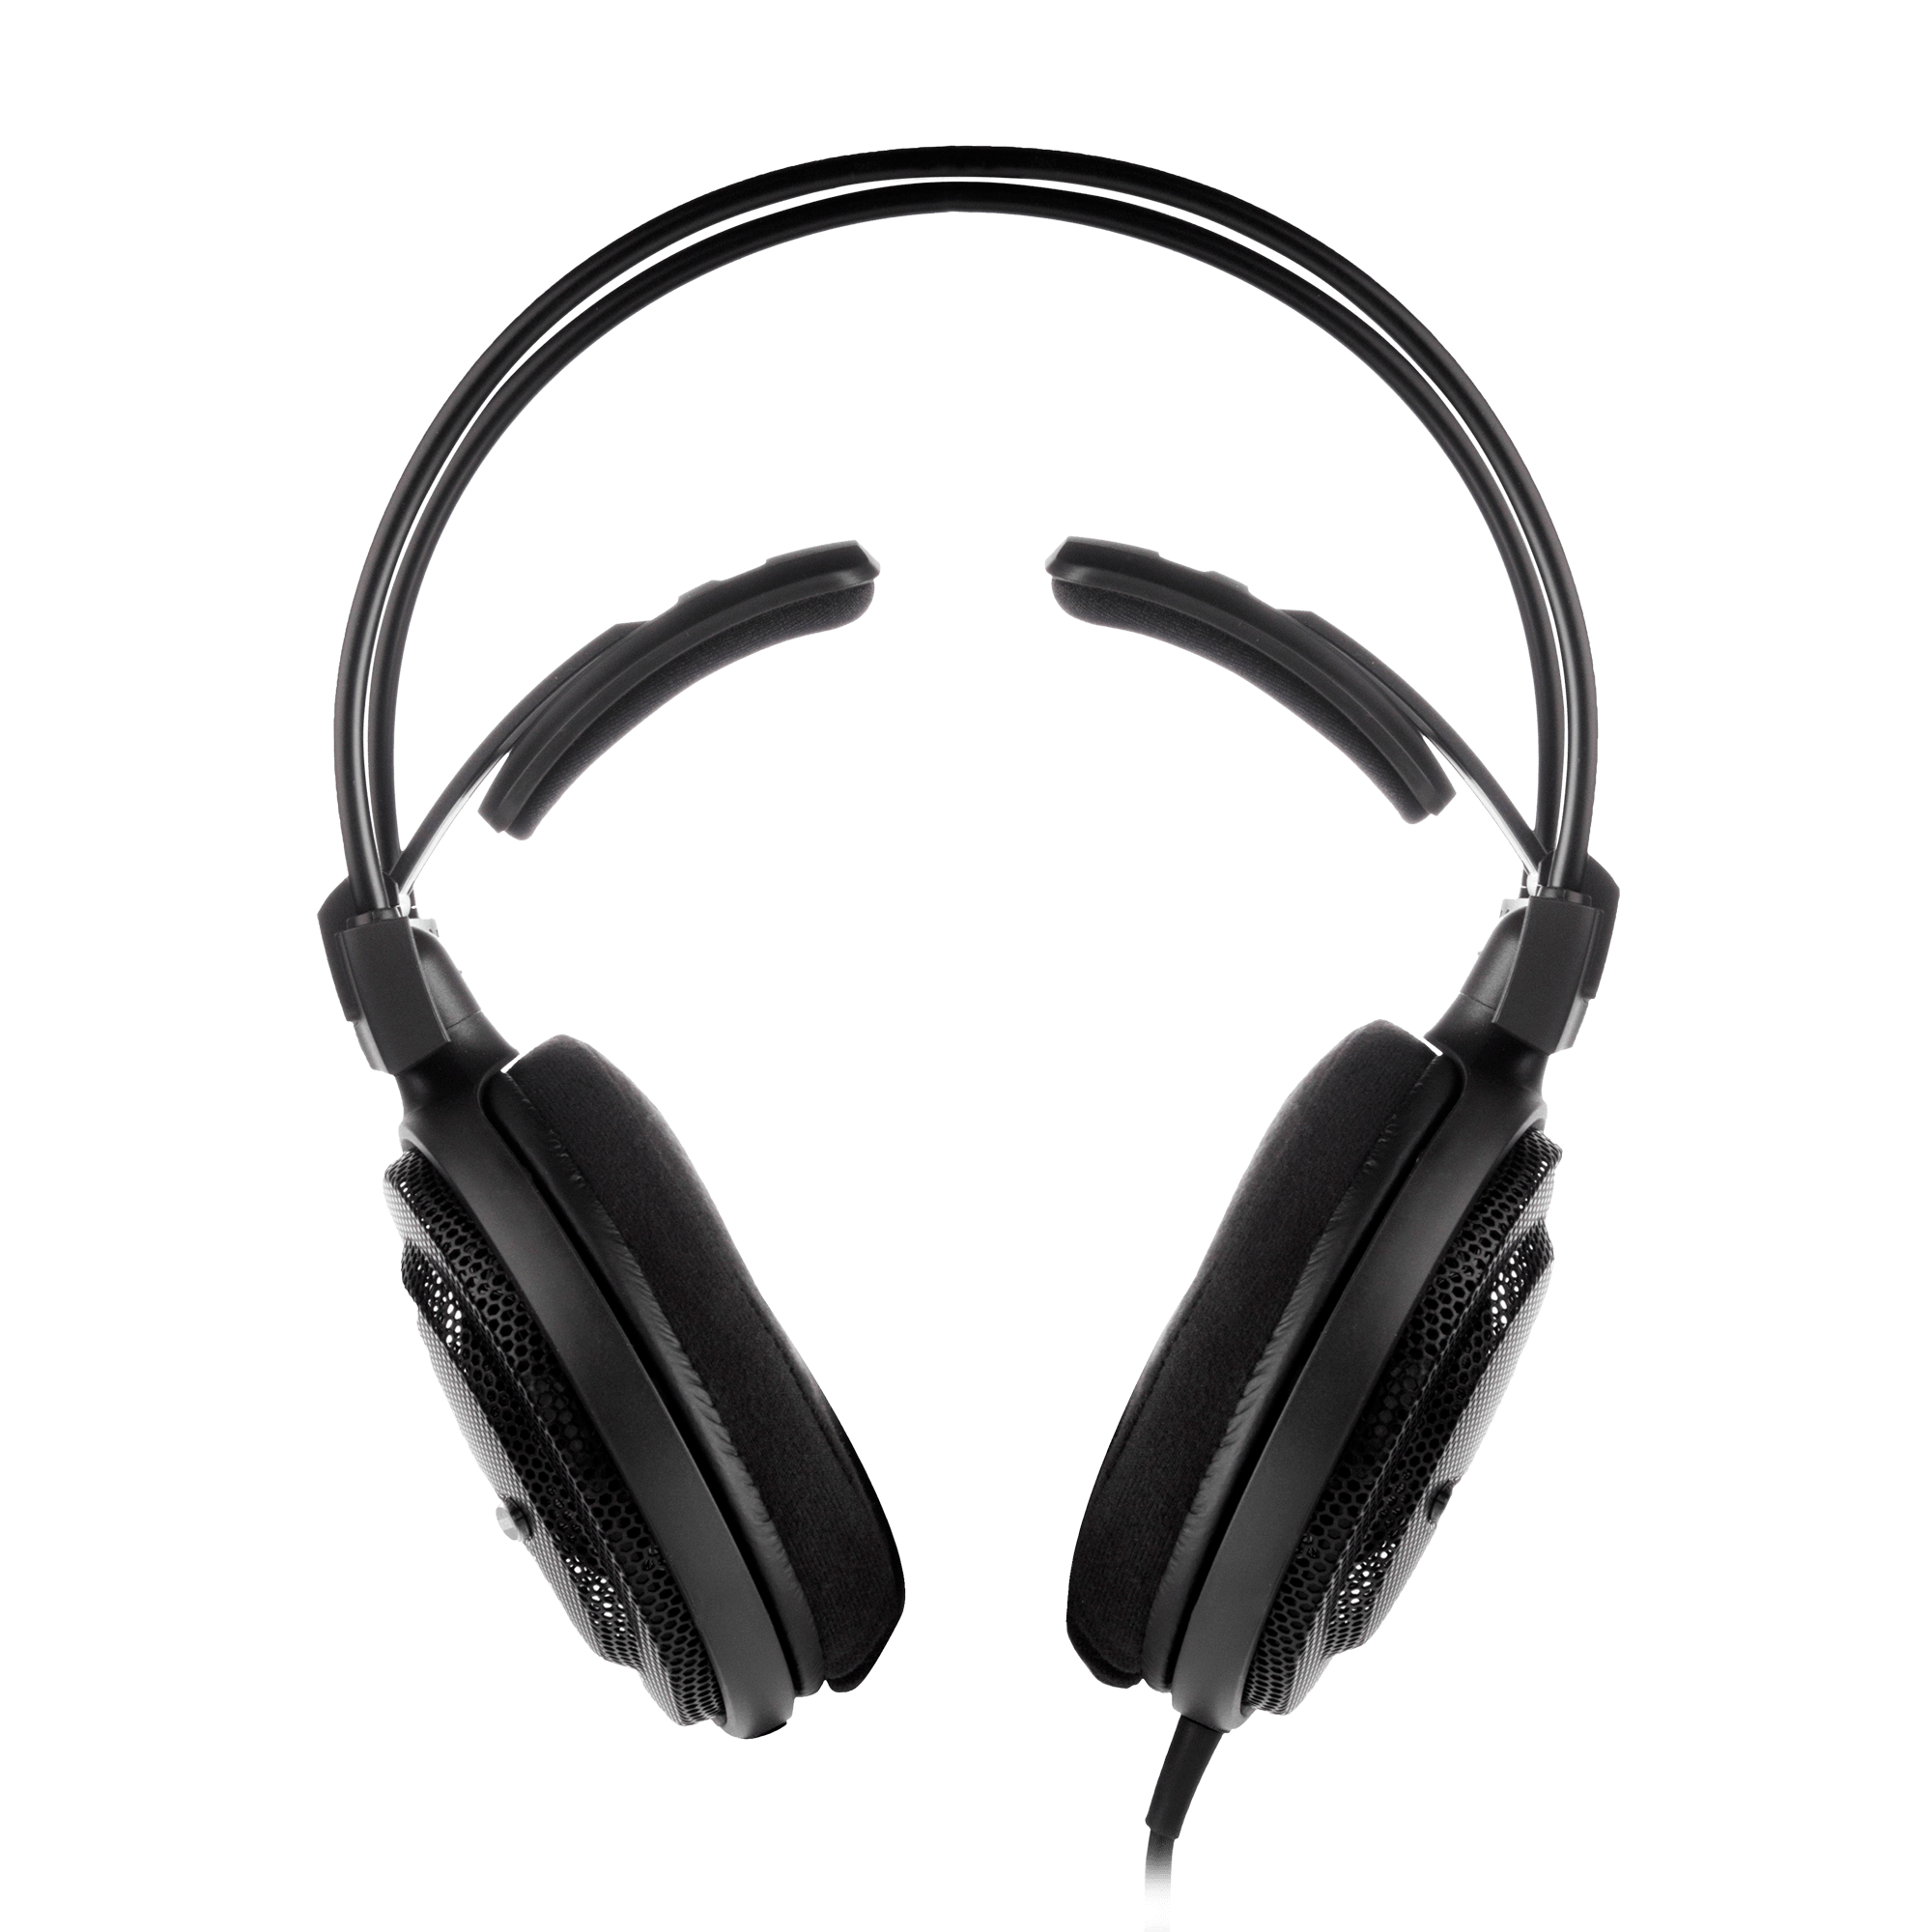 Audio-Technica ATH-AD500X-RB Audiophile Open-Air Headphones Black - Refurbished